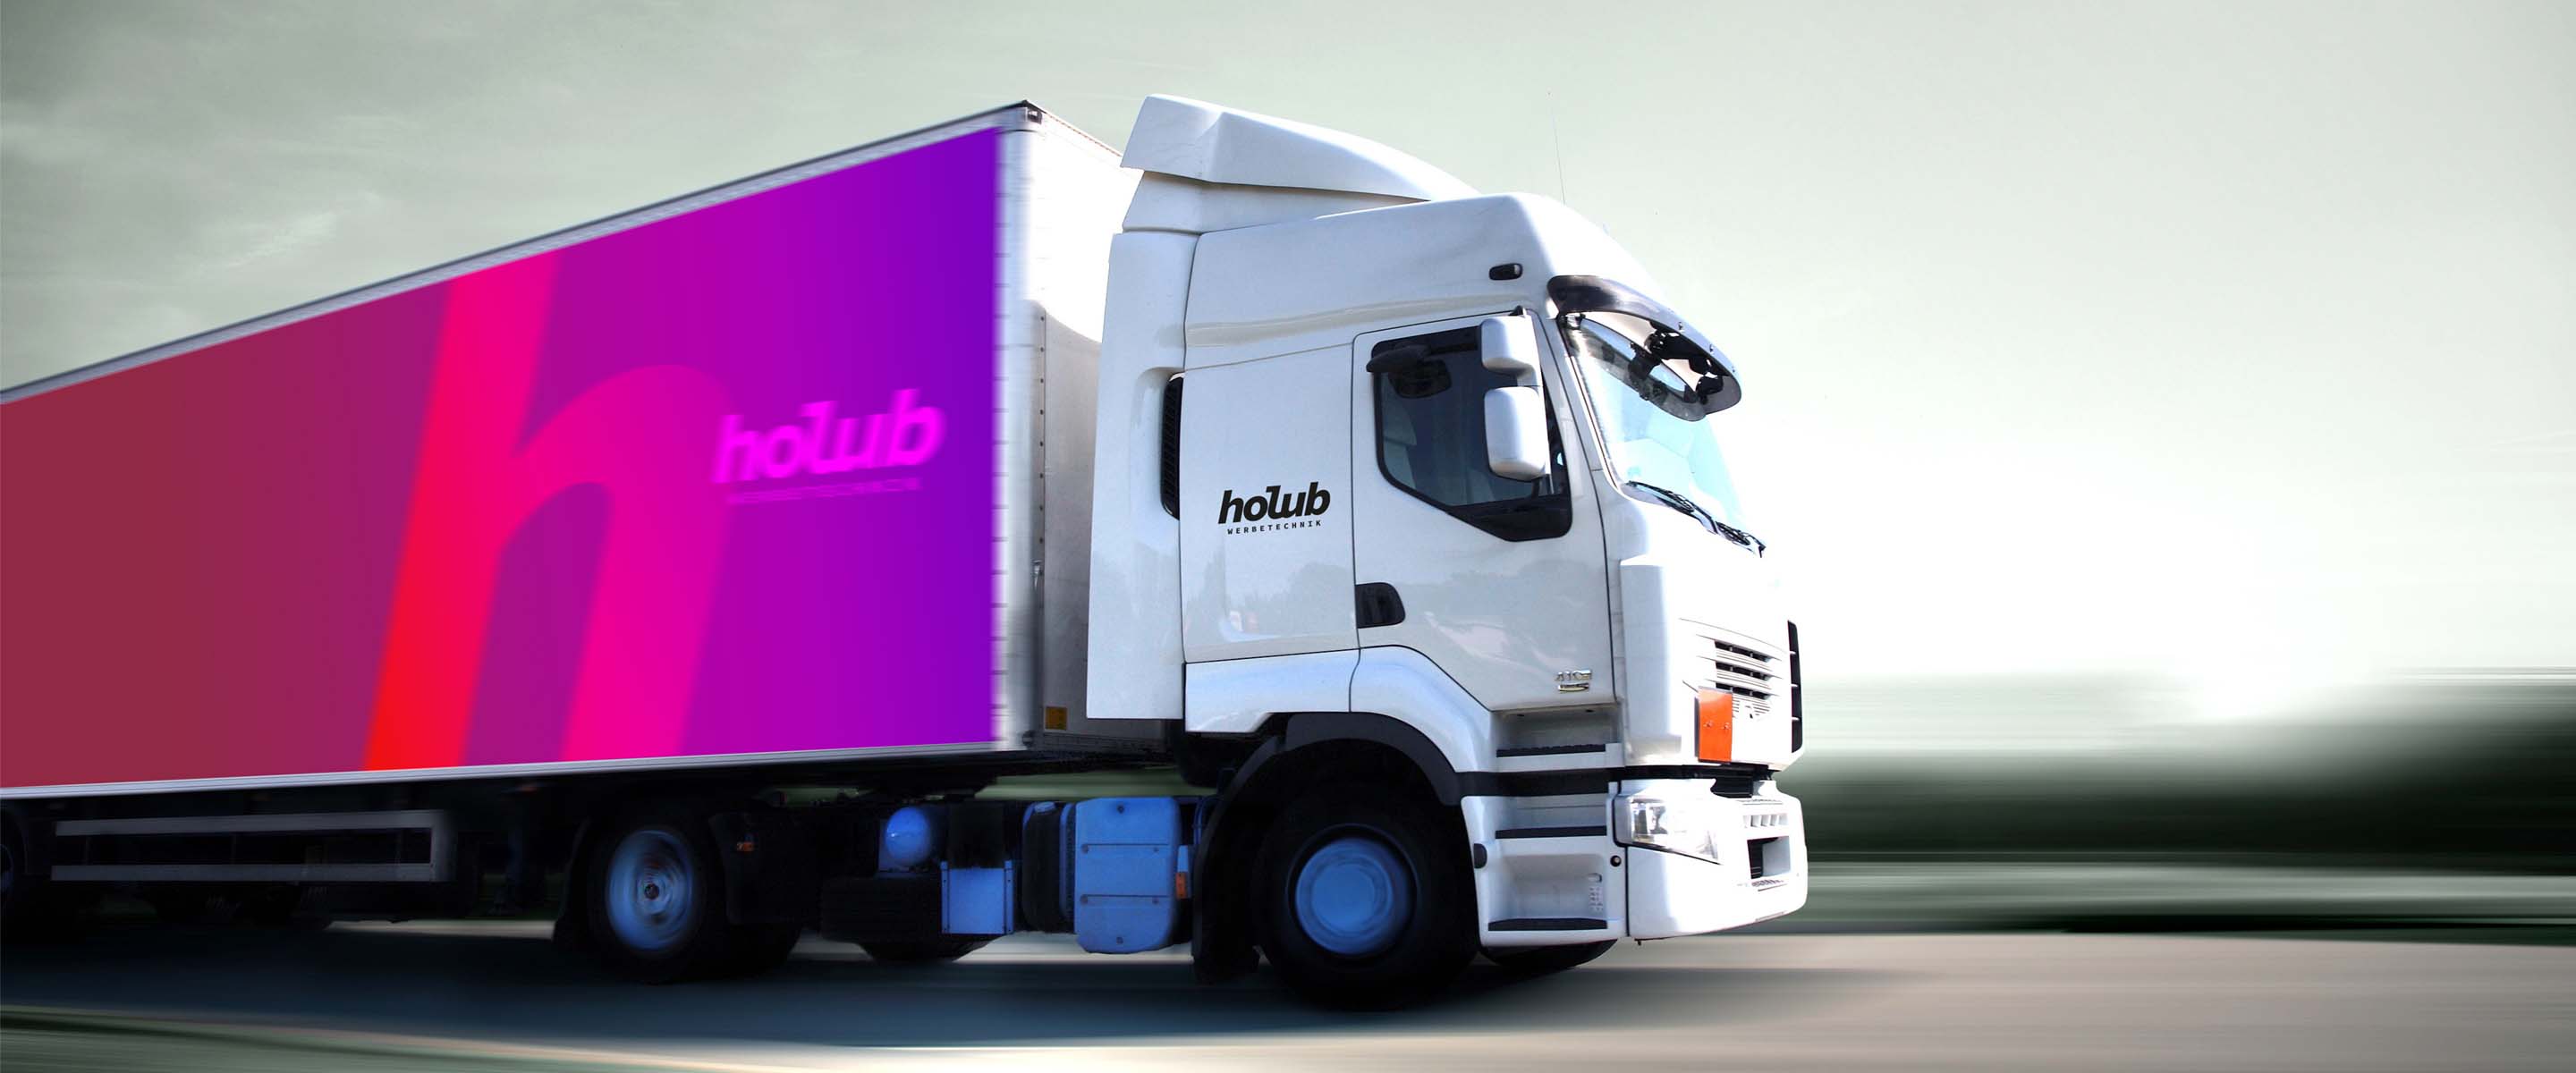 Holub Truck